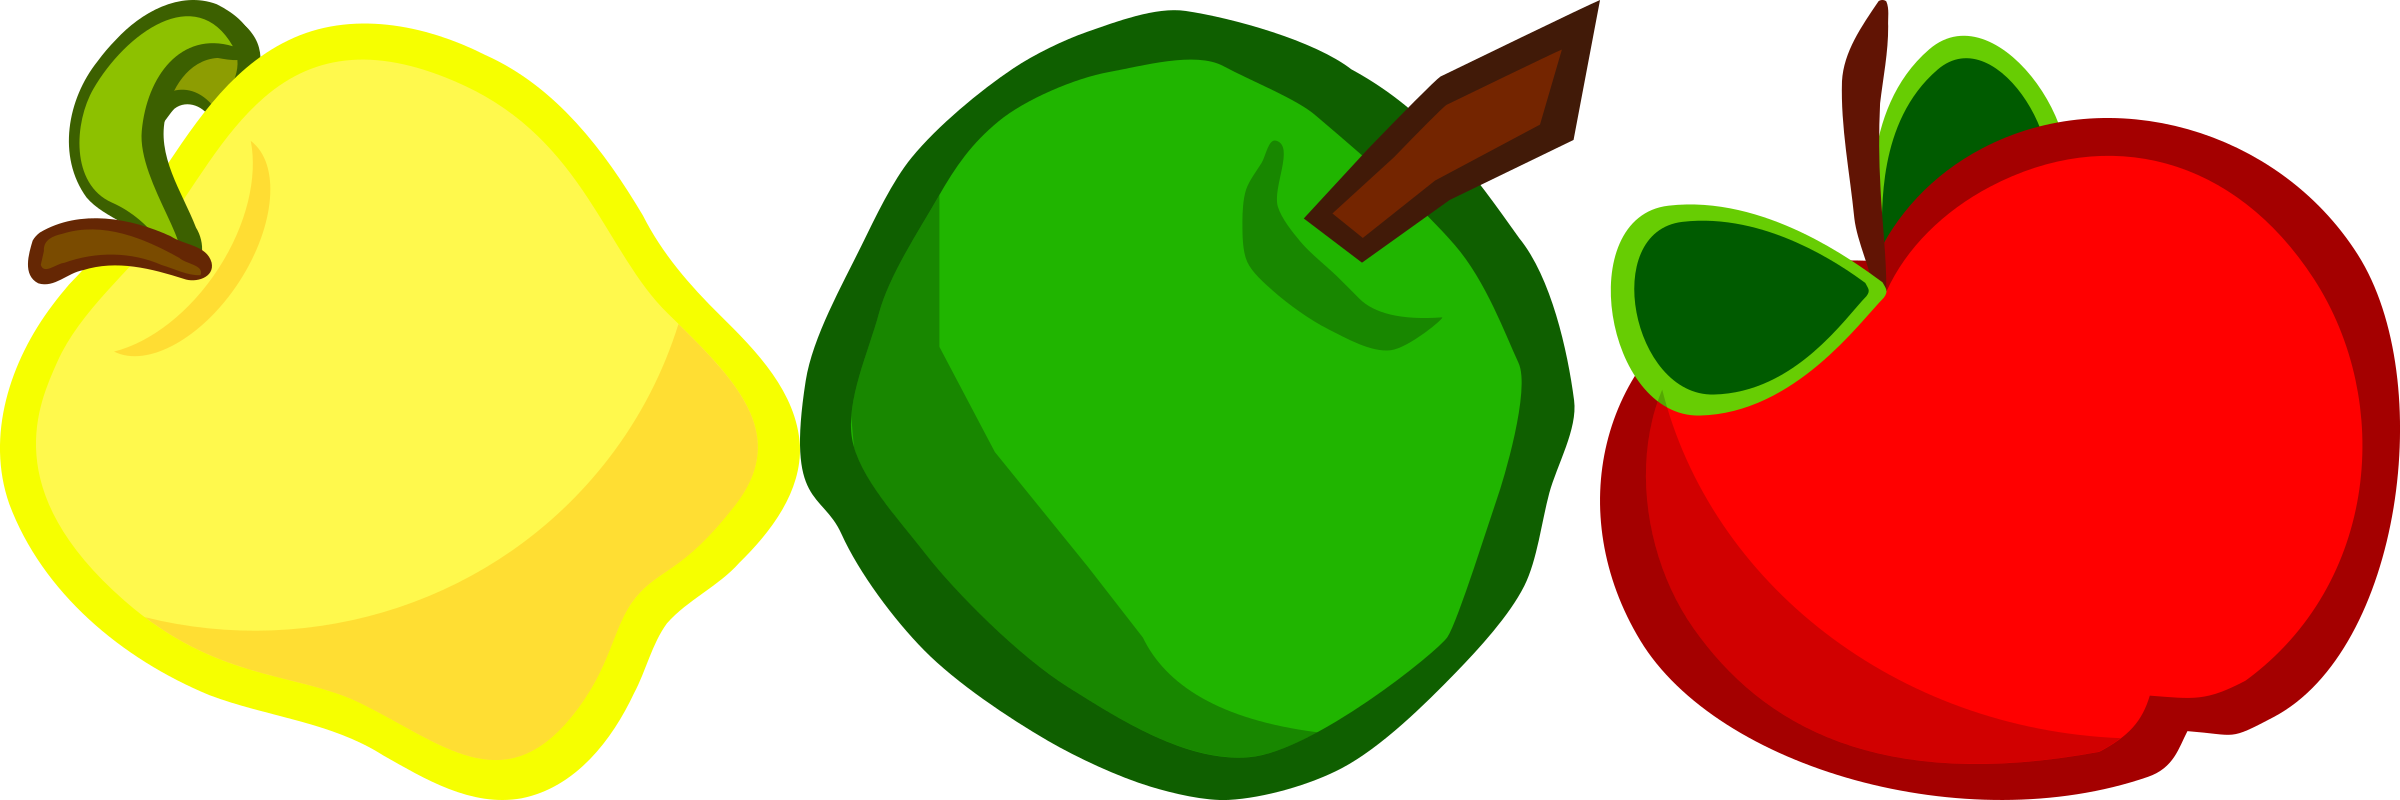 clipart apples banner